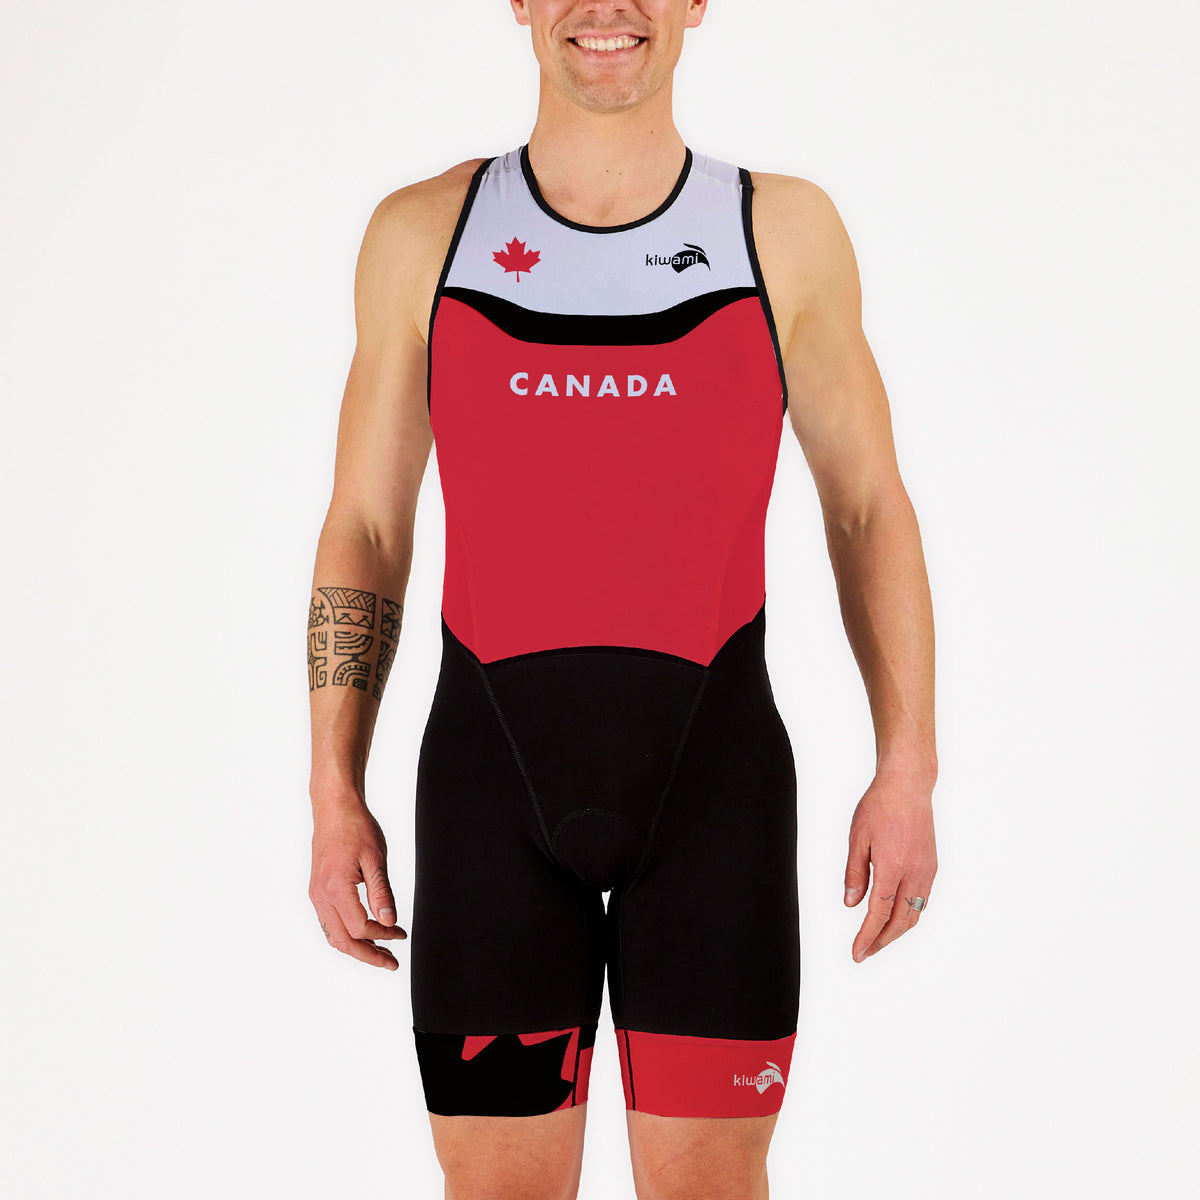 canada triathlon suit custom trisuit world triathlon canada ITU kiwami sports combinaison de triathlon personnalisée